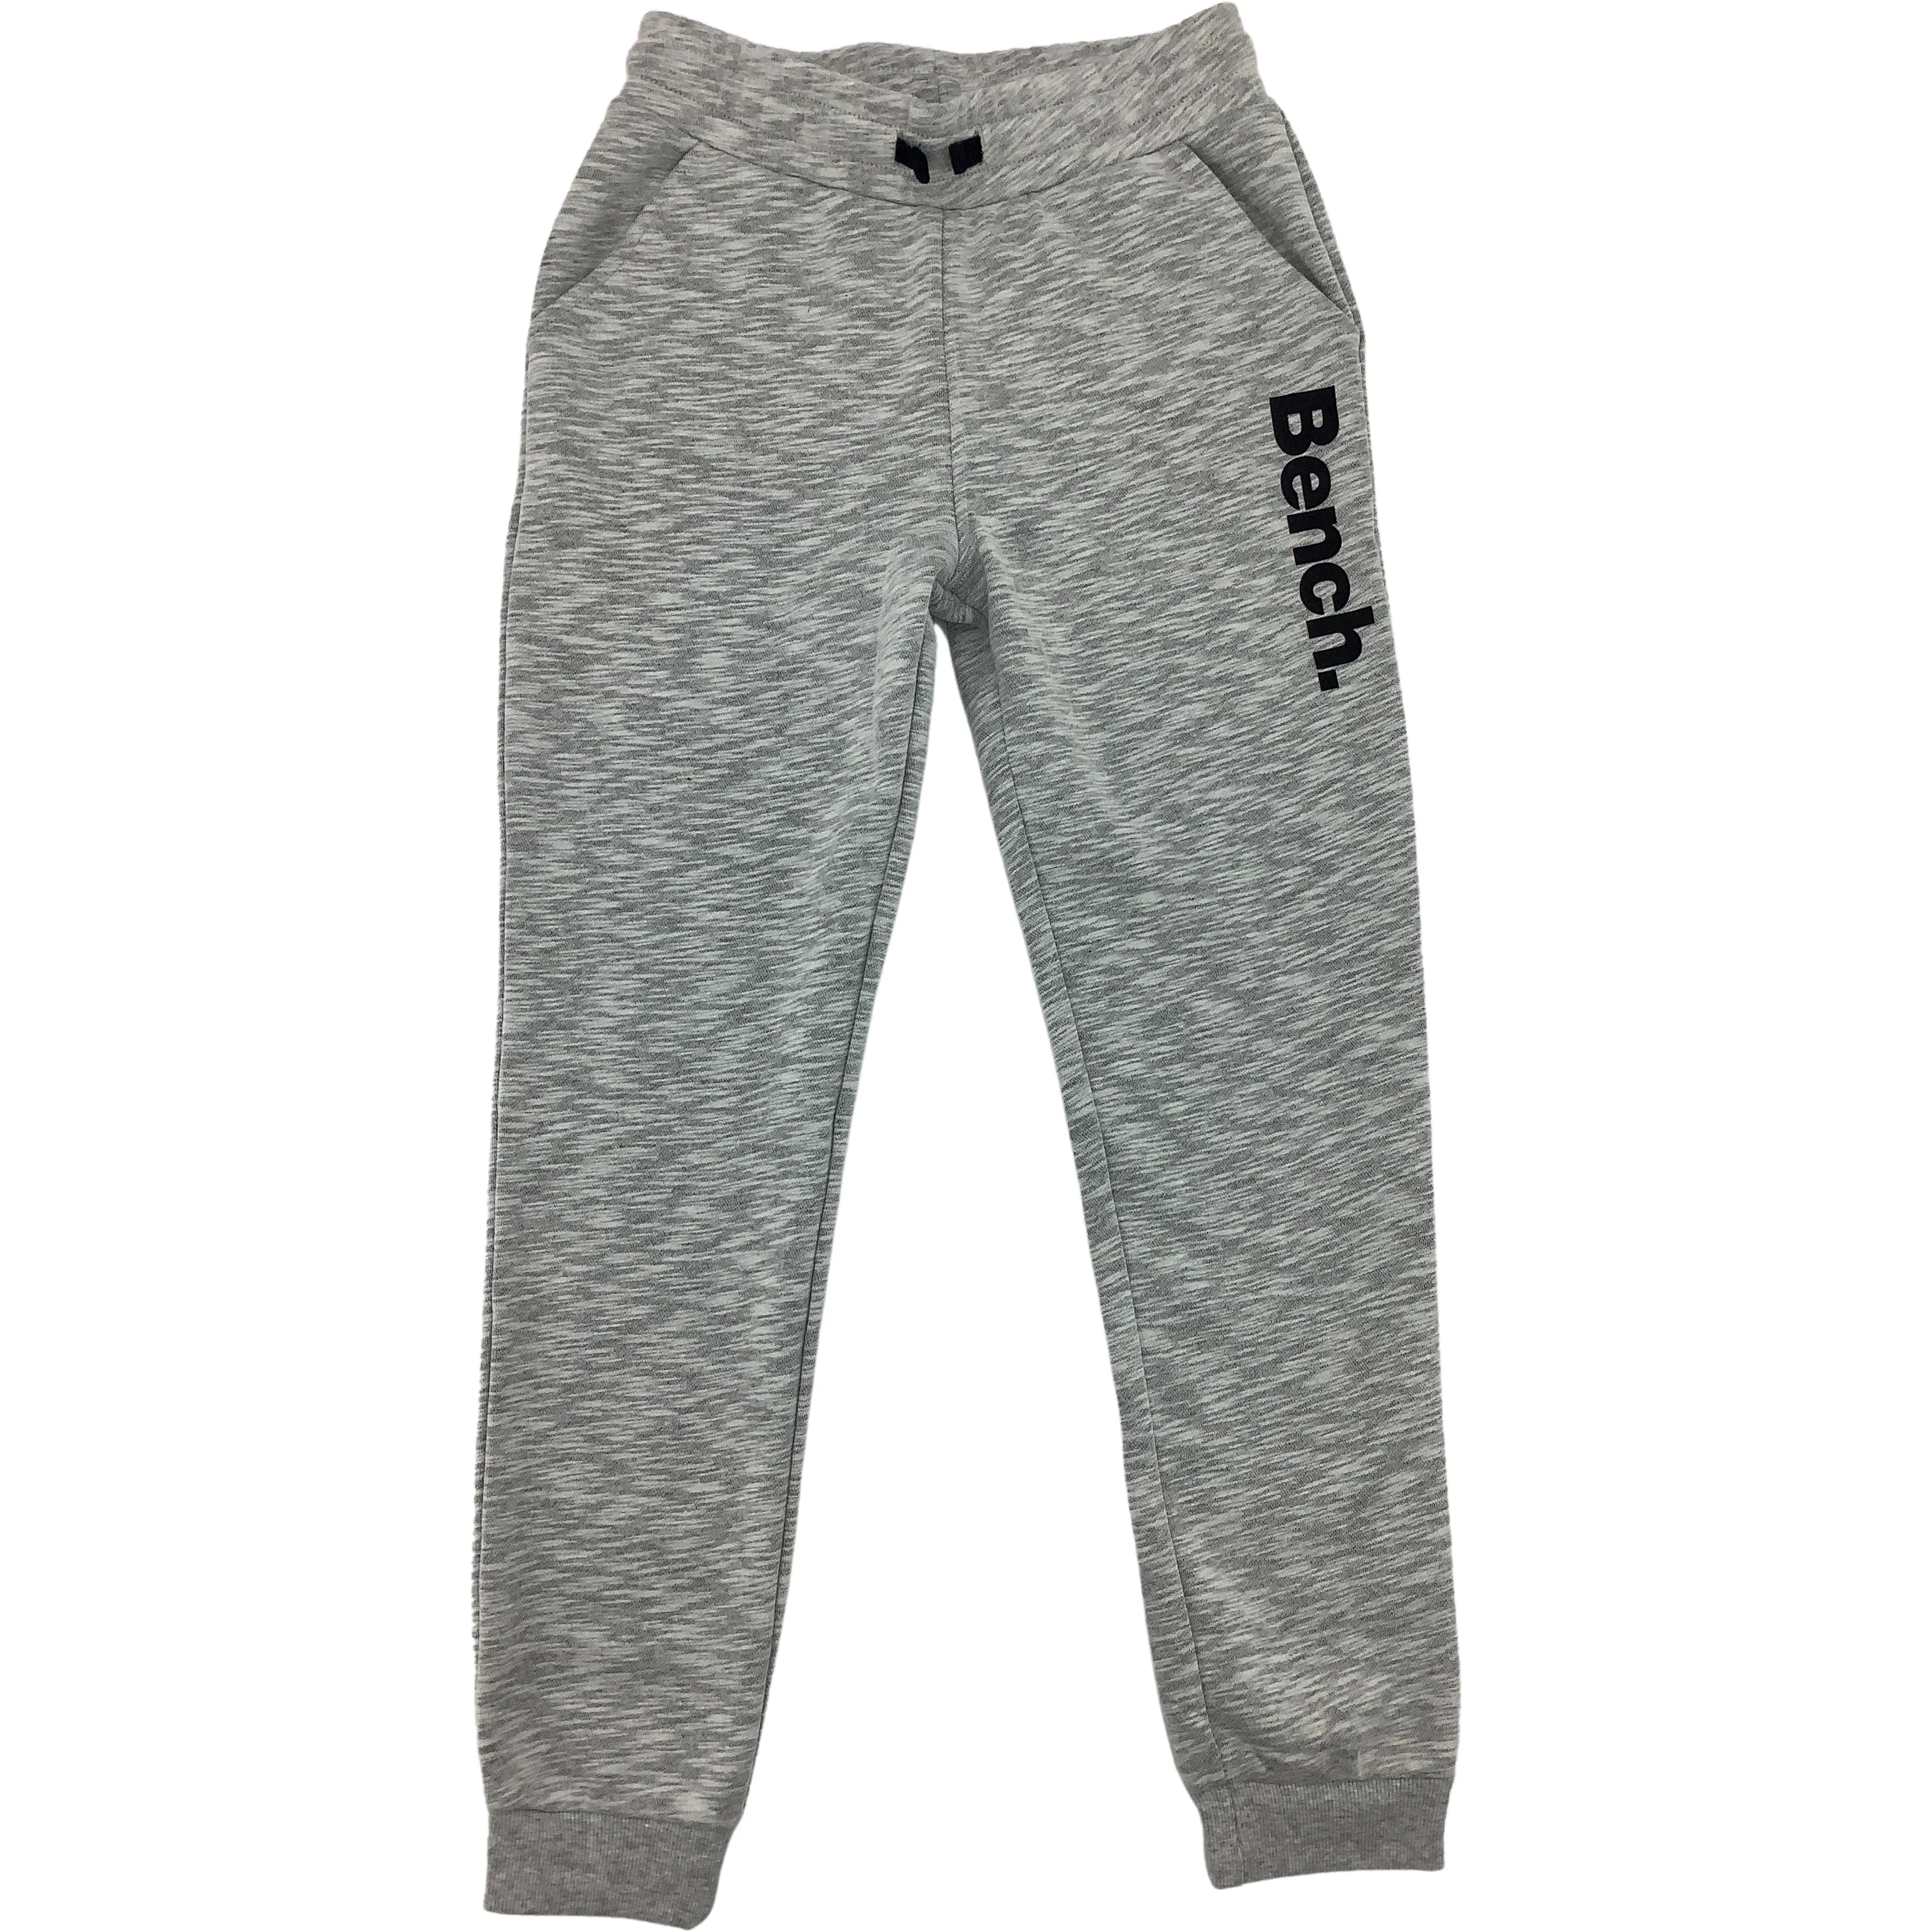 Bench Boy's Sweatpants / Light Grey / Kids Jogging Pants / Various sizes